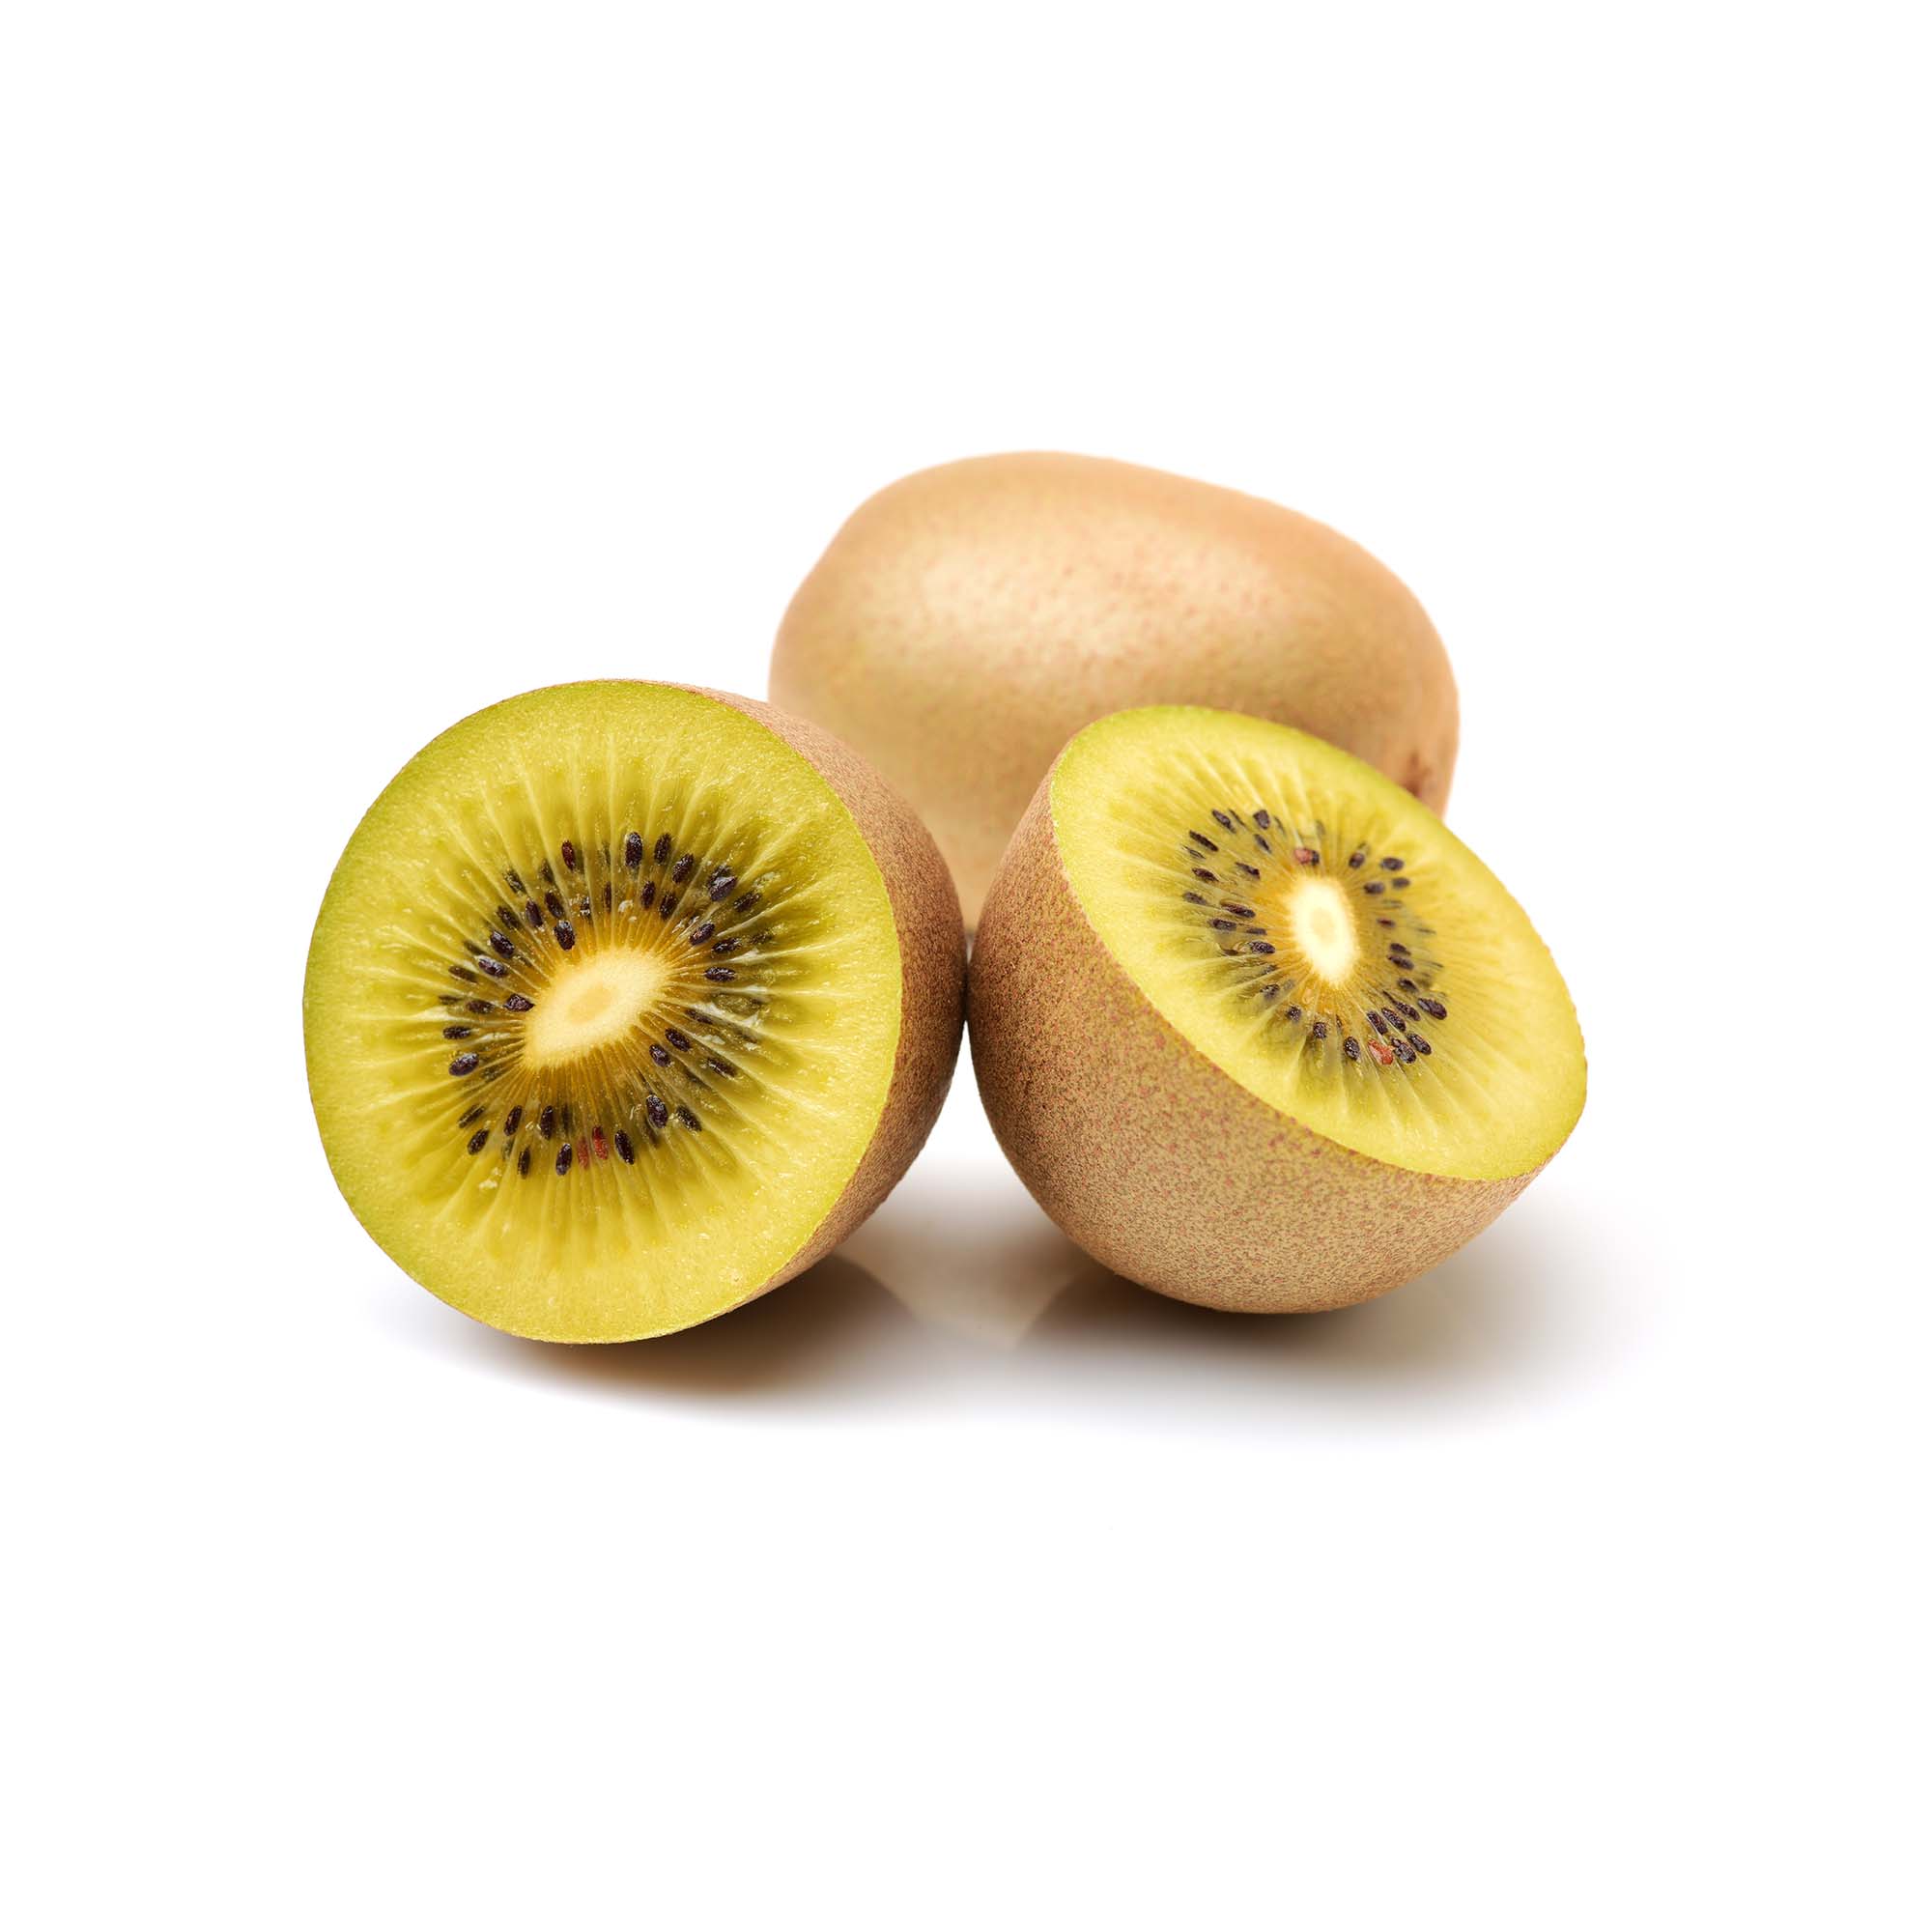 Exotic Now Rare Exotic - Buy Golden Kiwi Online Fruits UK Delivery Fruit, –